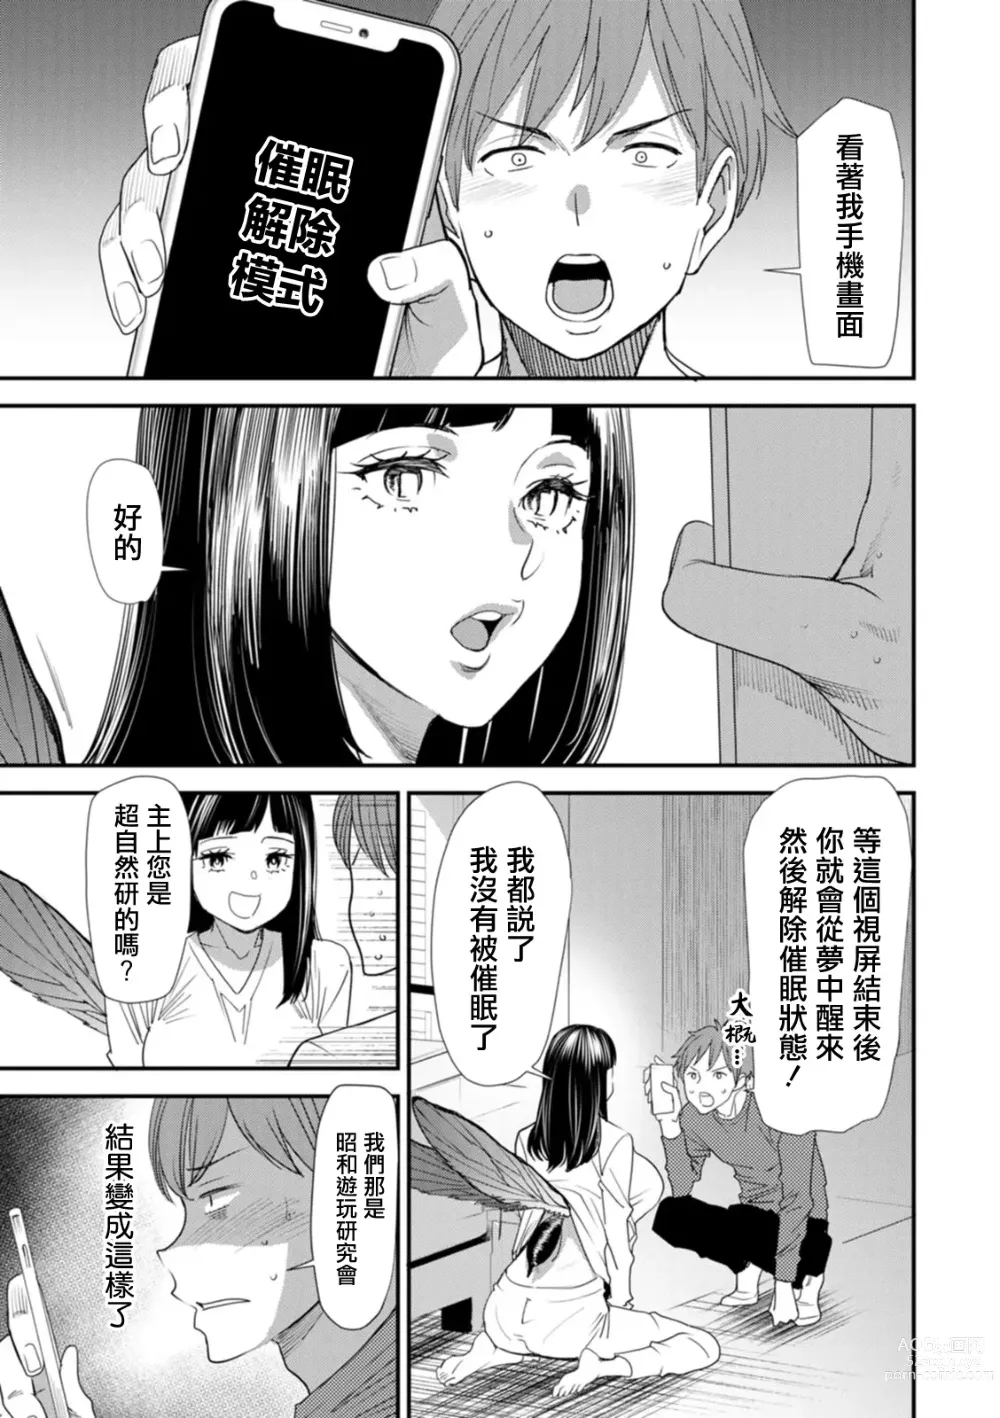 Page 1 of manga 淫魔女子大生の憂鬱 第三話 淫魔和主上